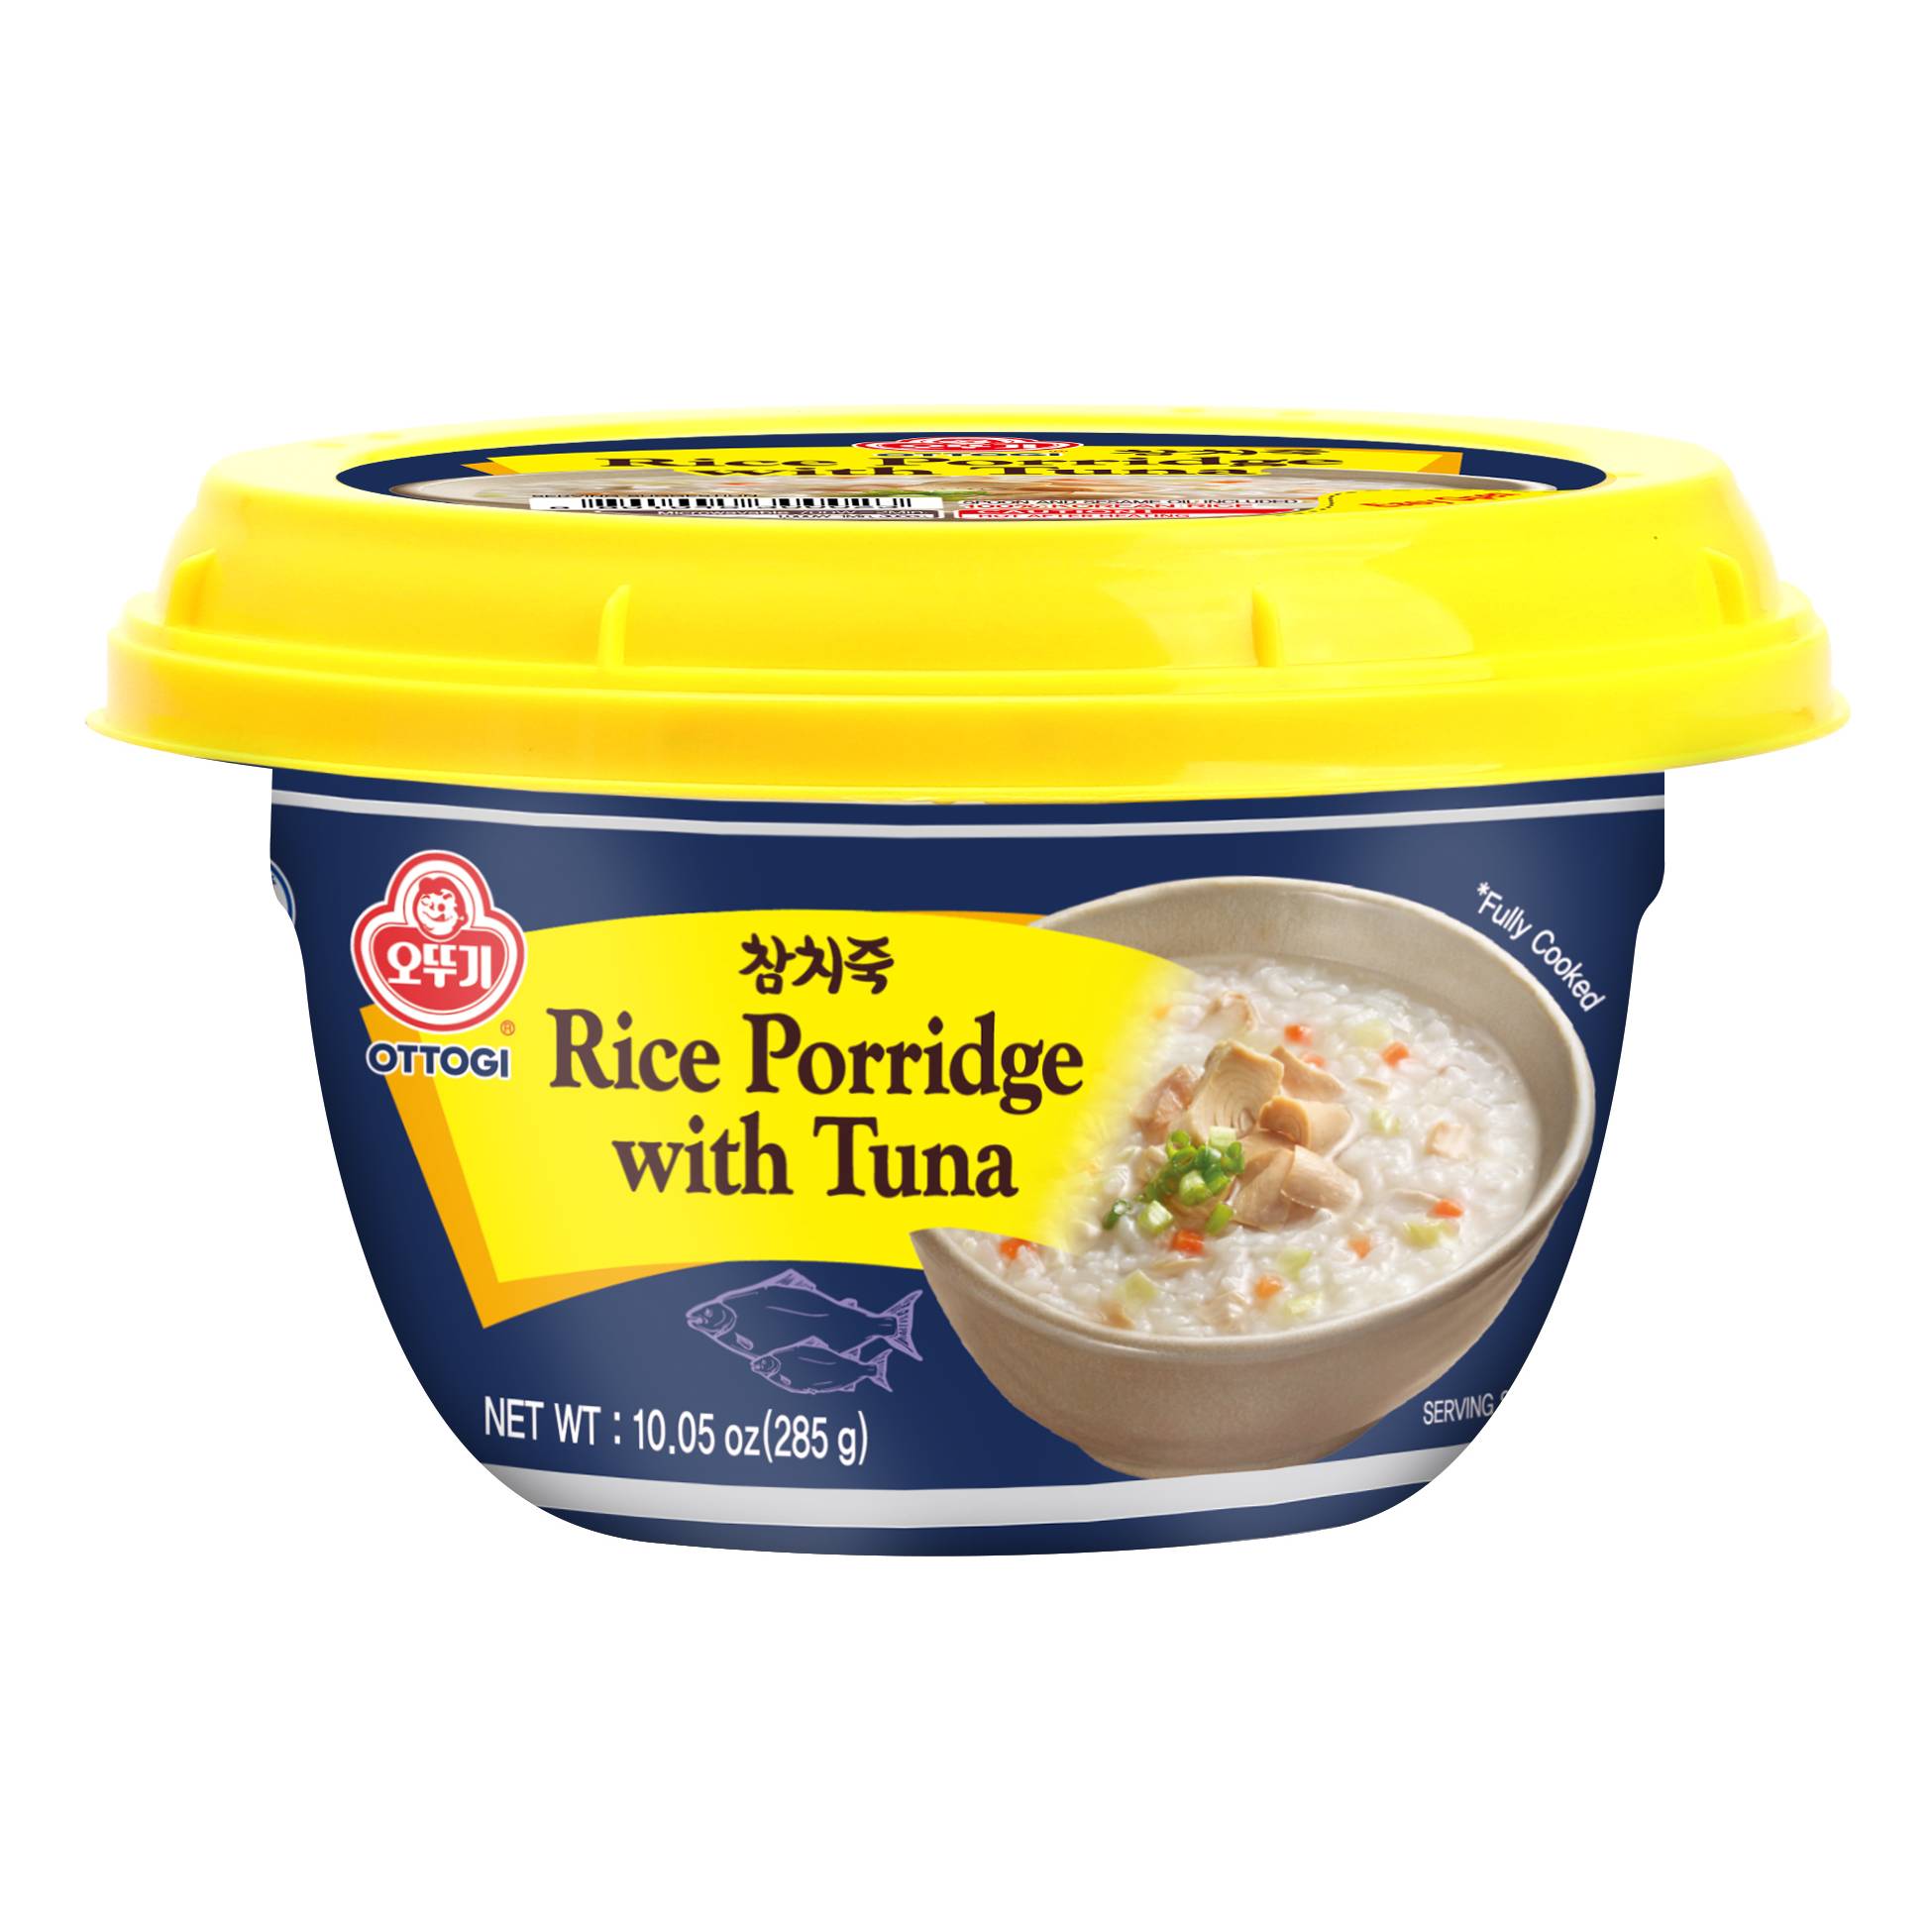 RICE PORRIDGE WITH TUNA